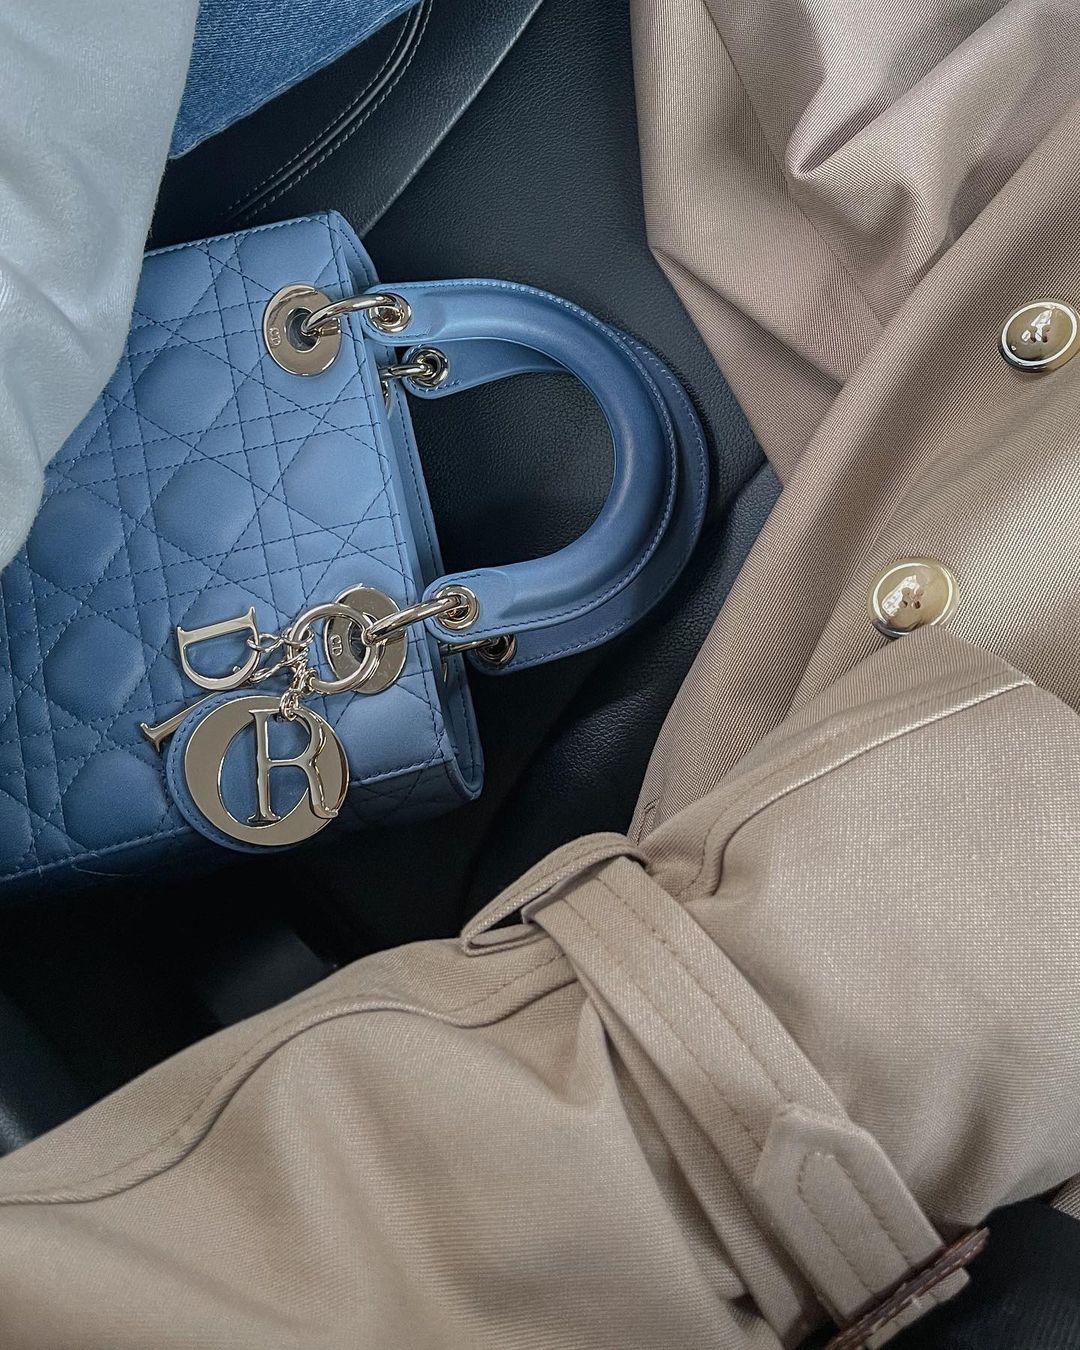 10 Classic Designer Handbag Brands, From Chanel to Hermès